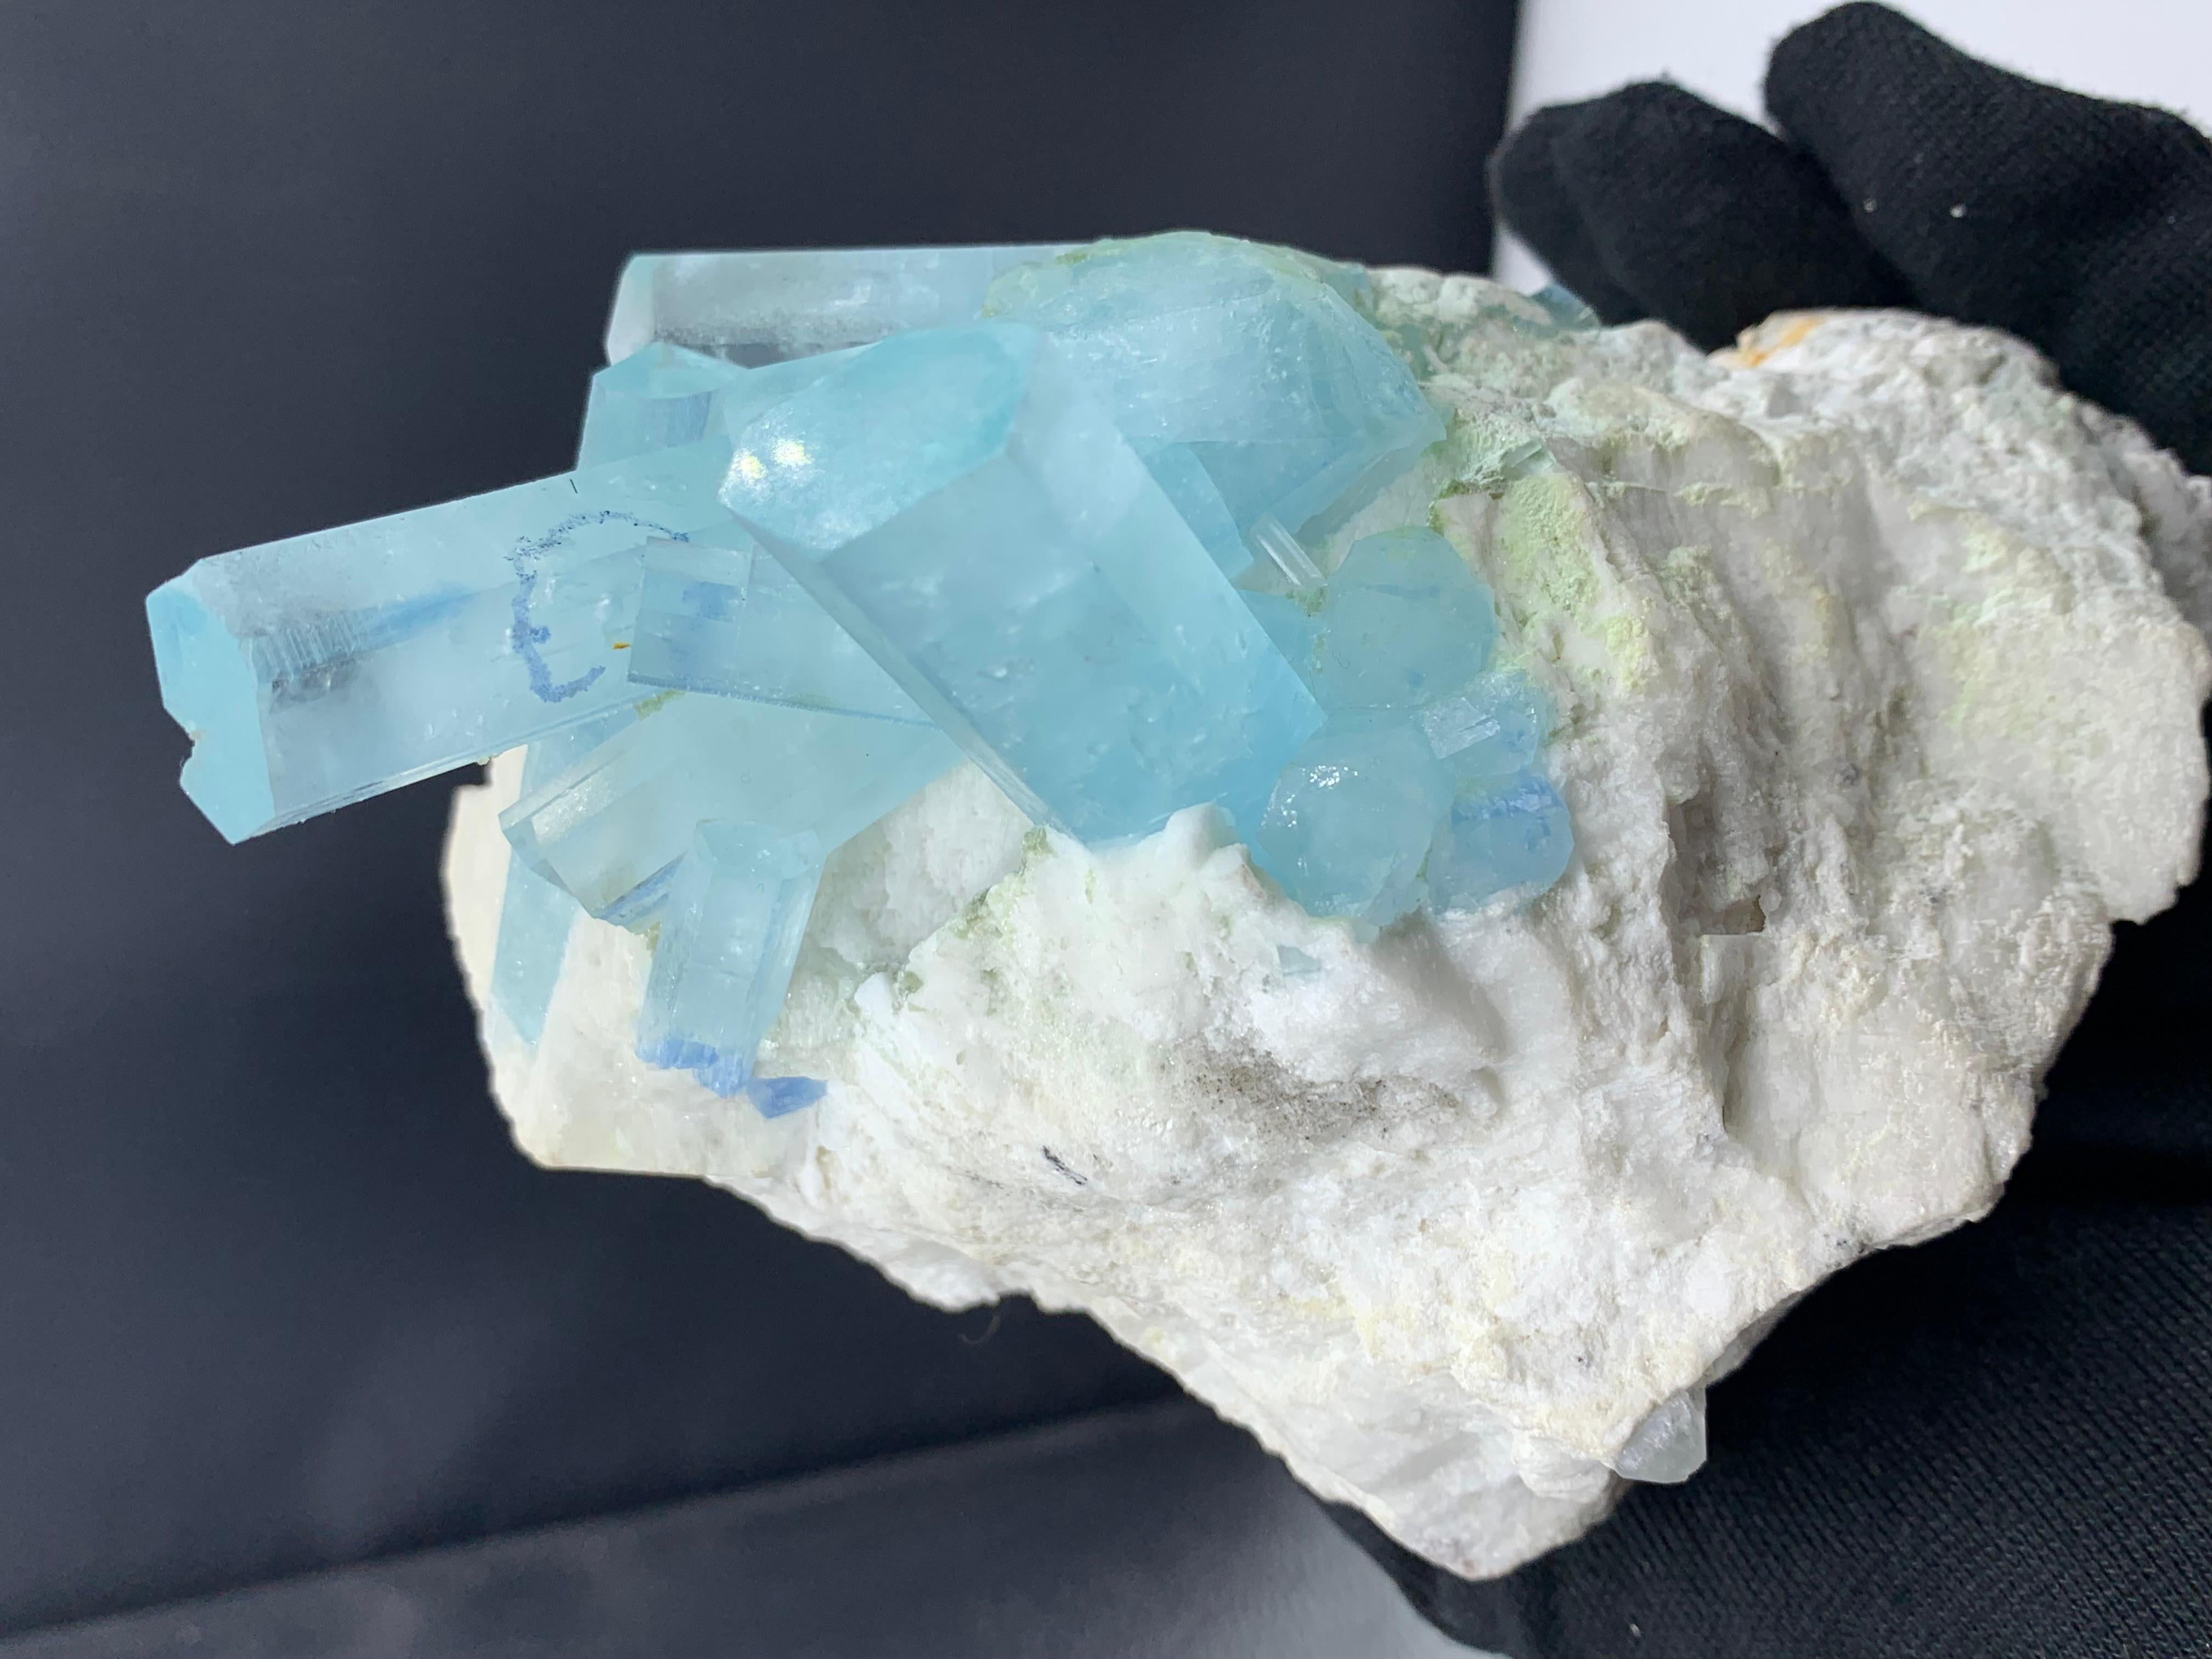 Other 2 kg Plus Pretty Aquamarine Crystal Bunch Attach With Feldspar From Pakistan  For Sale